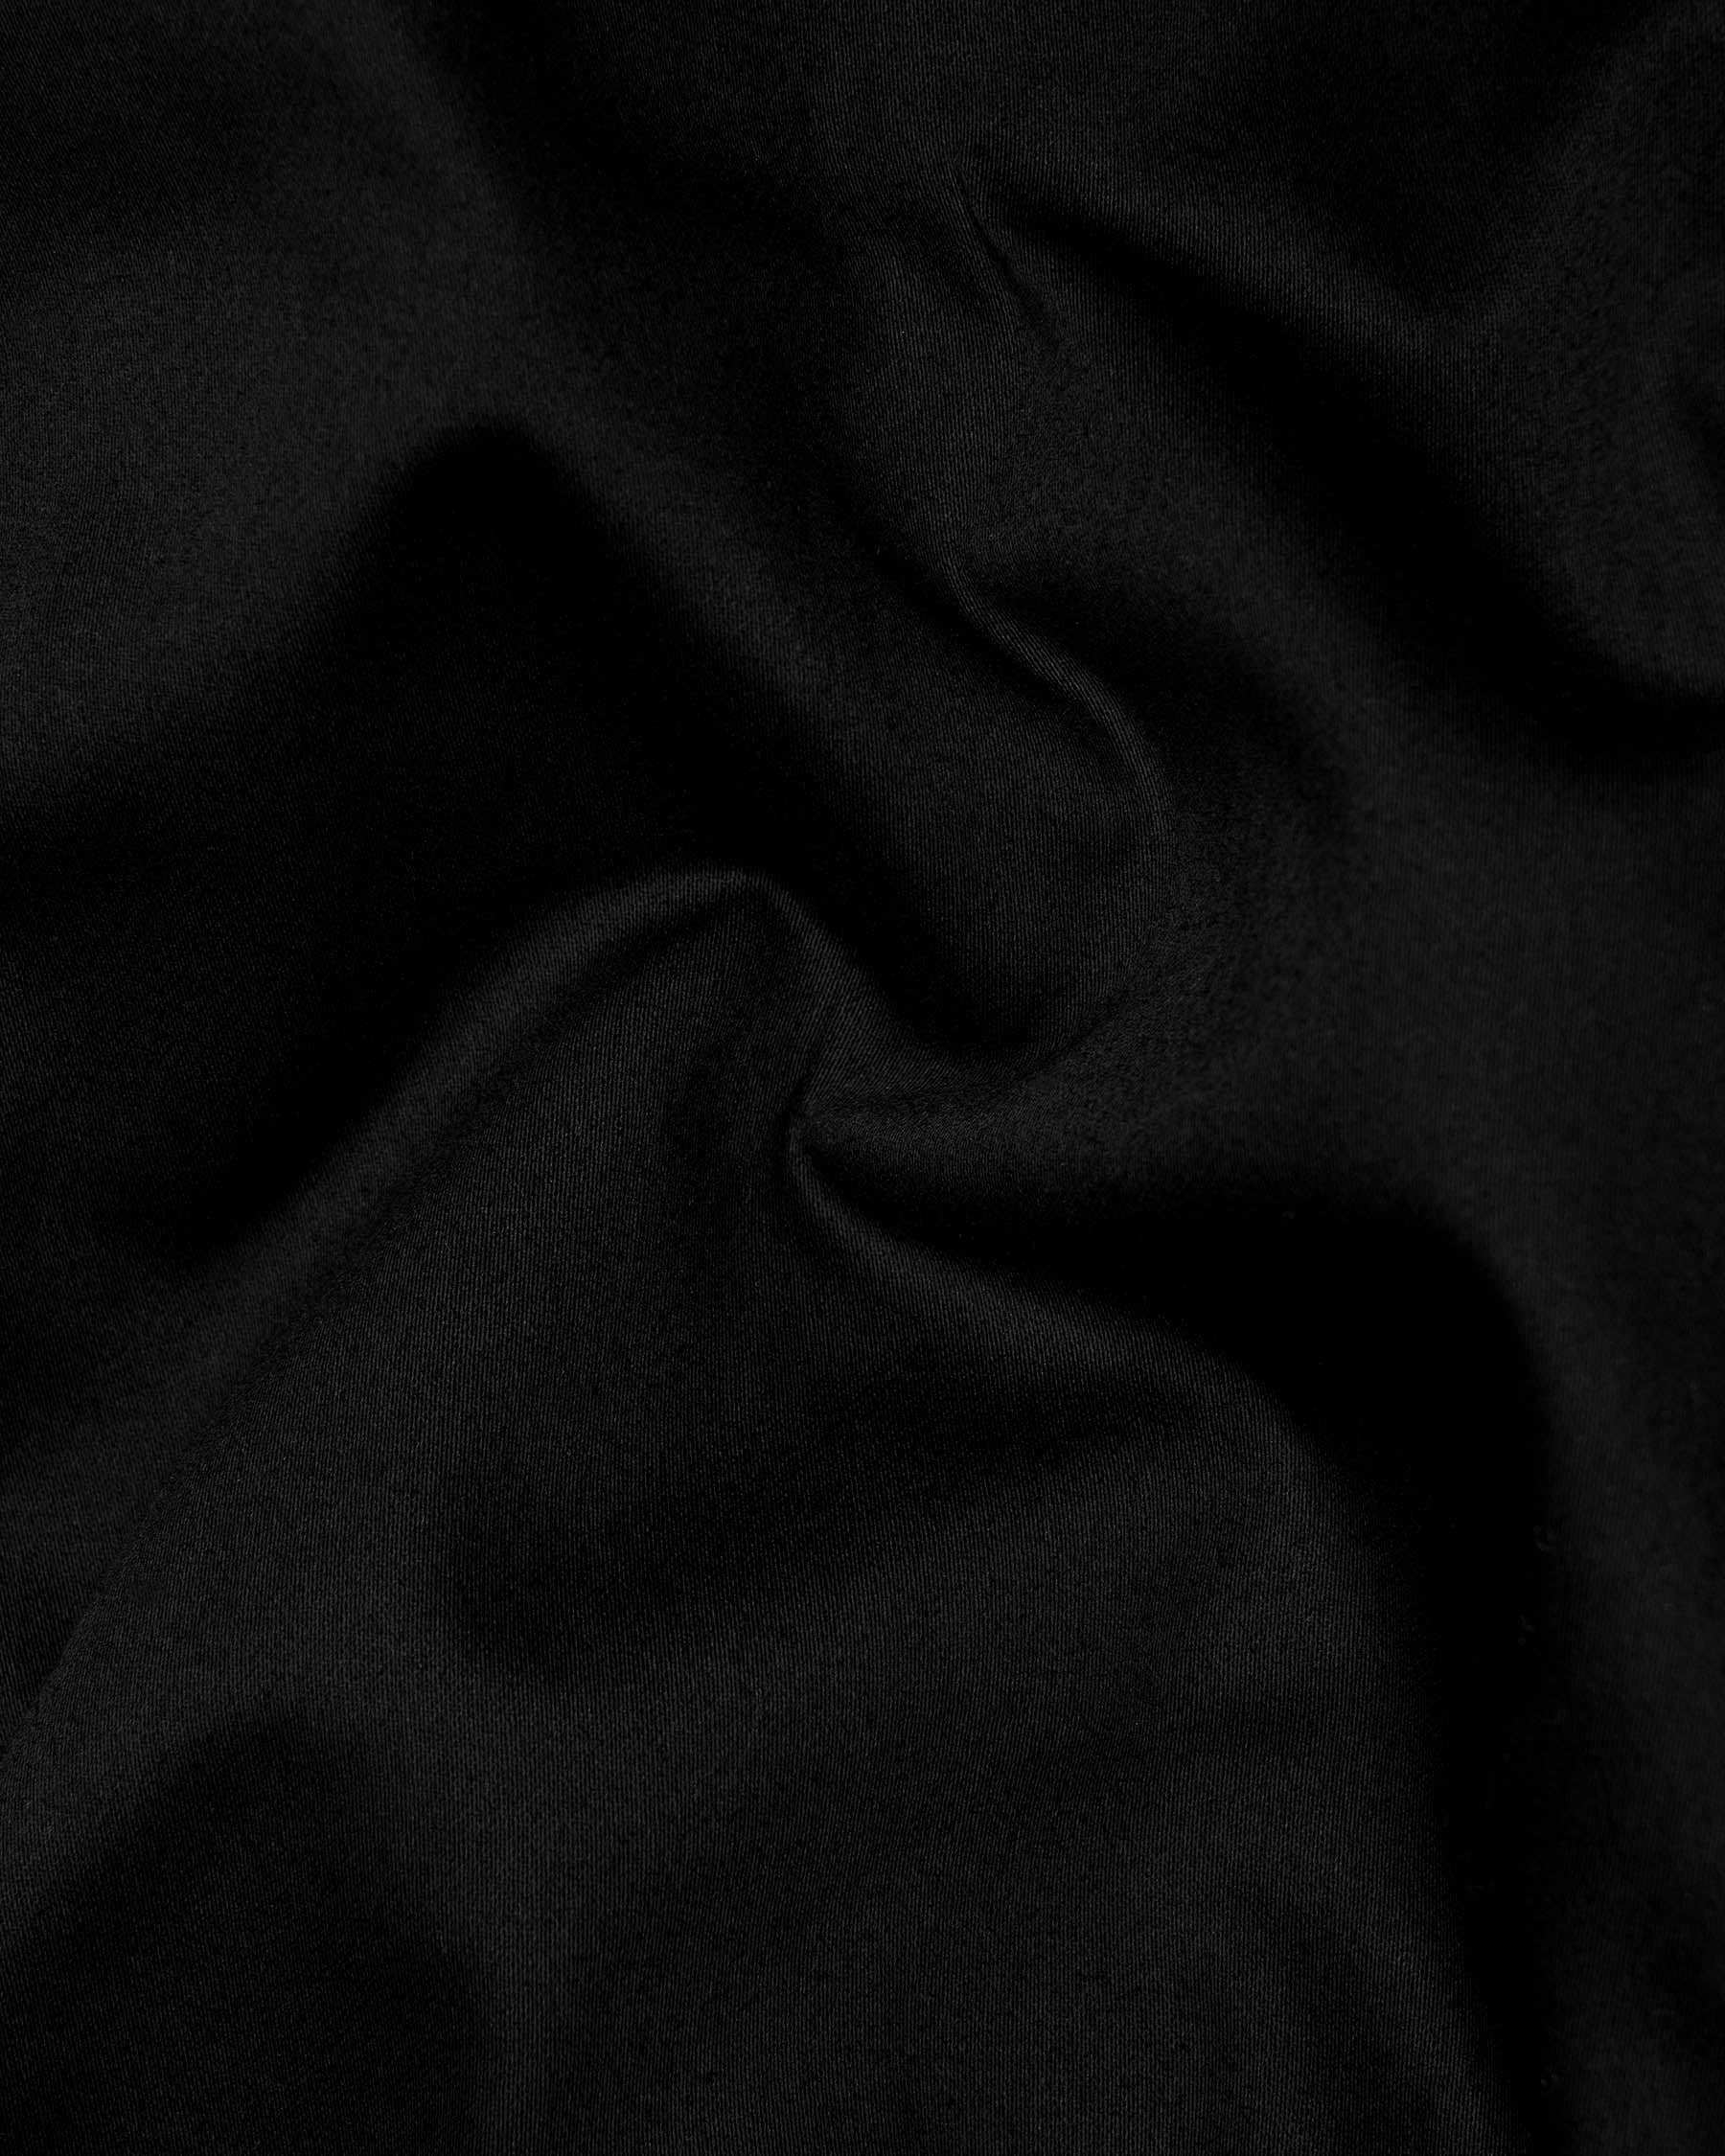 Jade Black with White Striped Super Soft Premium Cotton Designer Shorts SR153-28, SR153-30, SR153-32, SR153-34, SR153-36, SR153-38, SR153-40, SR153-42, SR153-44